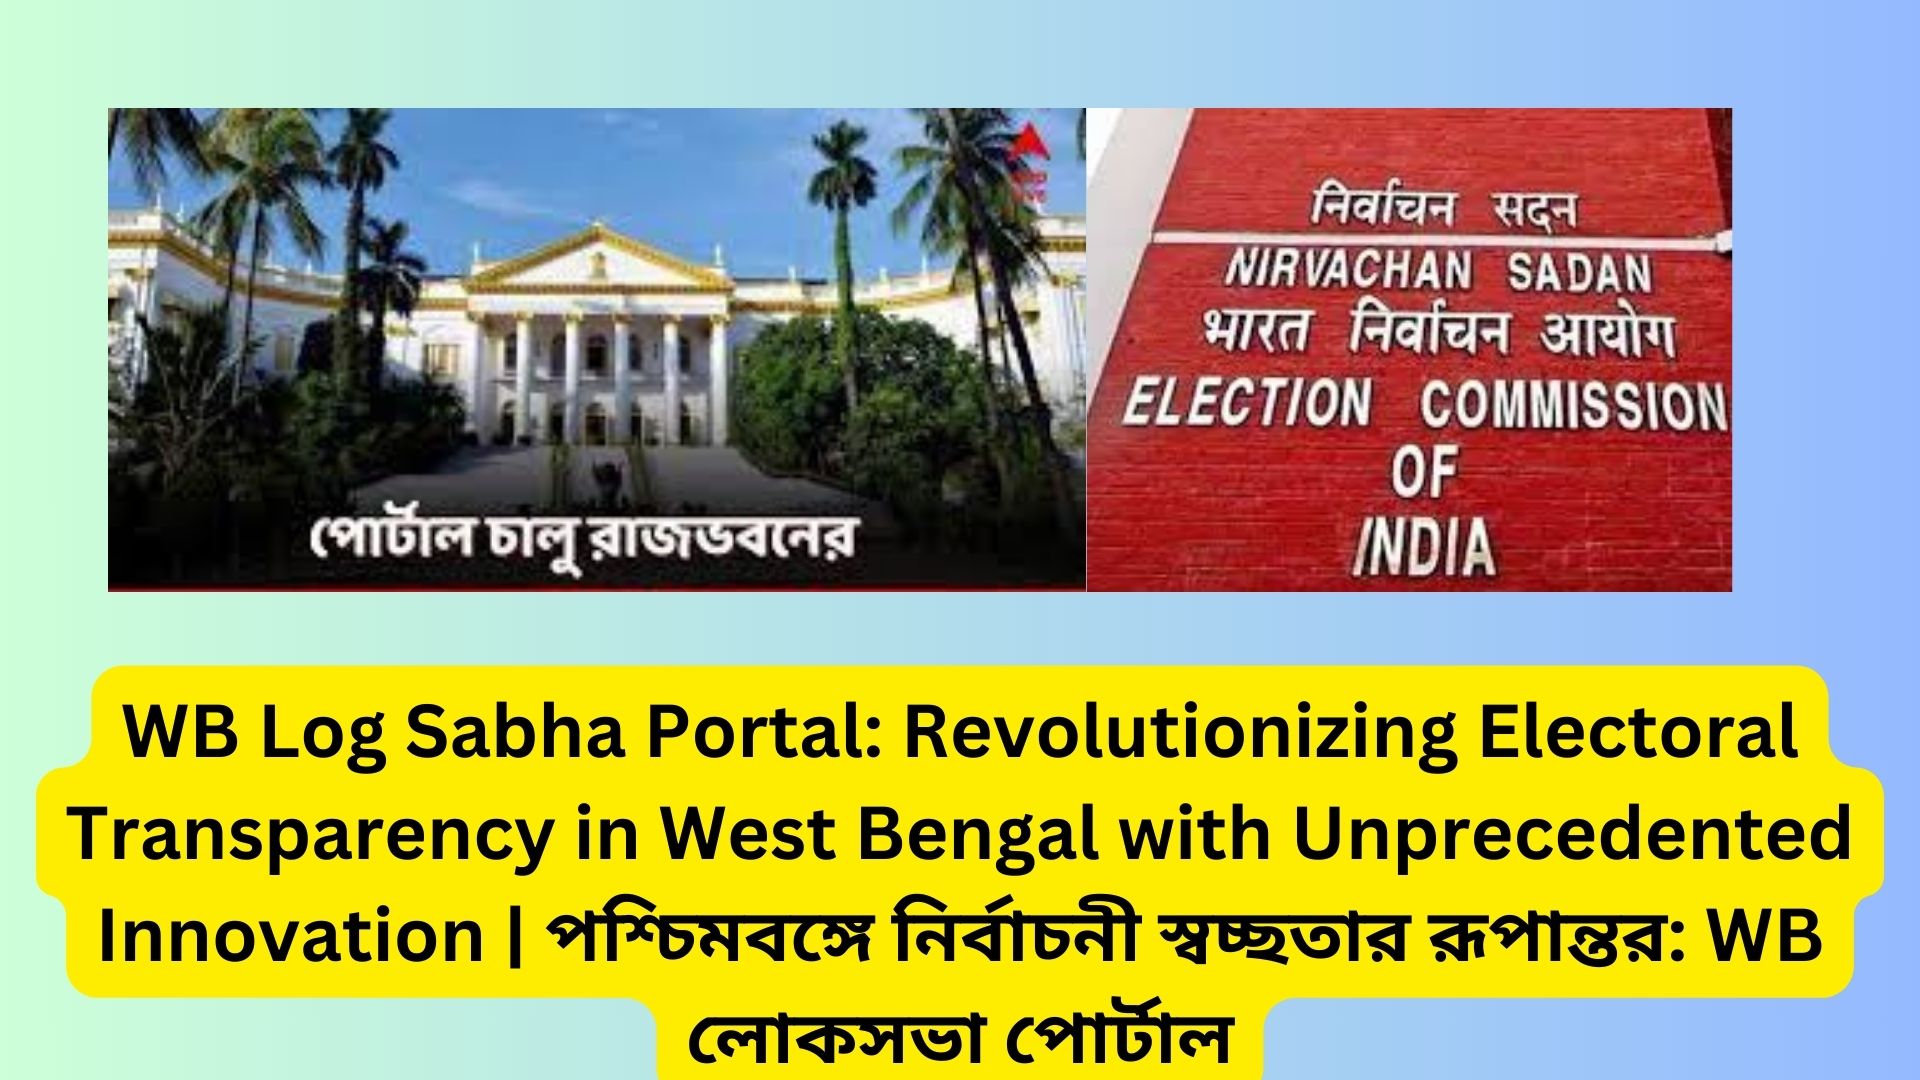 WB Log Sabha Portal: Revolutionizing Electoral Transparency in West Bengal with Unprecedented Innovation | পশ্চিমবঙ্গে নির্বাচনী স্বচ্ছতার রূপান্তর: WB লোকসভা পোর্টাল